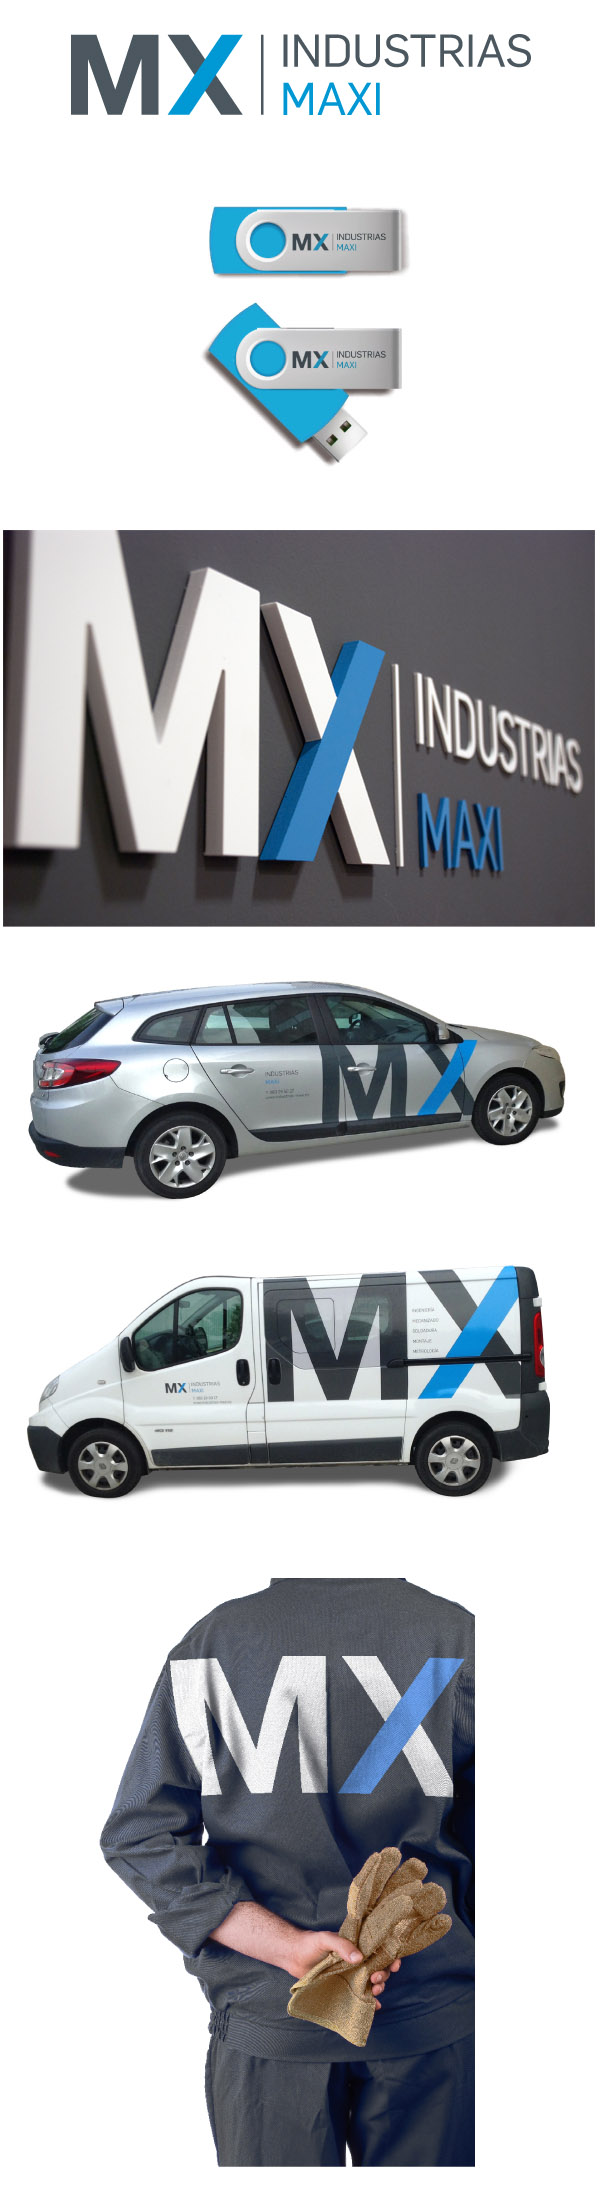 rqr-comunicacion-imagen corporativa-diseño de logotipos-Industrias MAXI